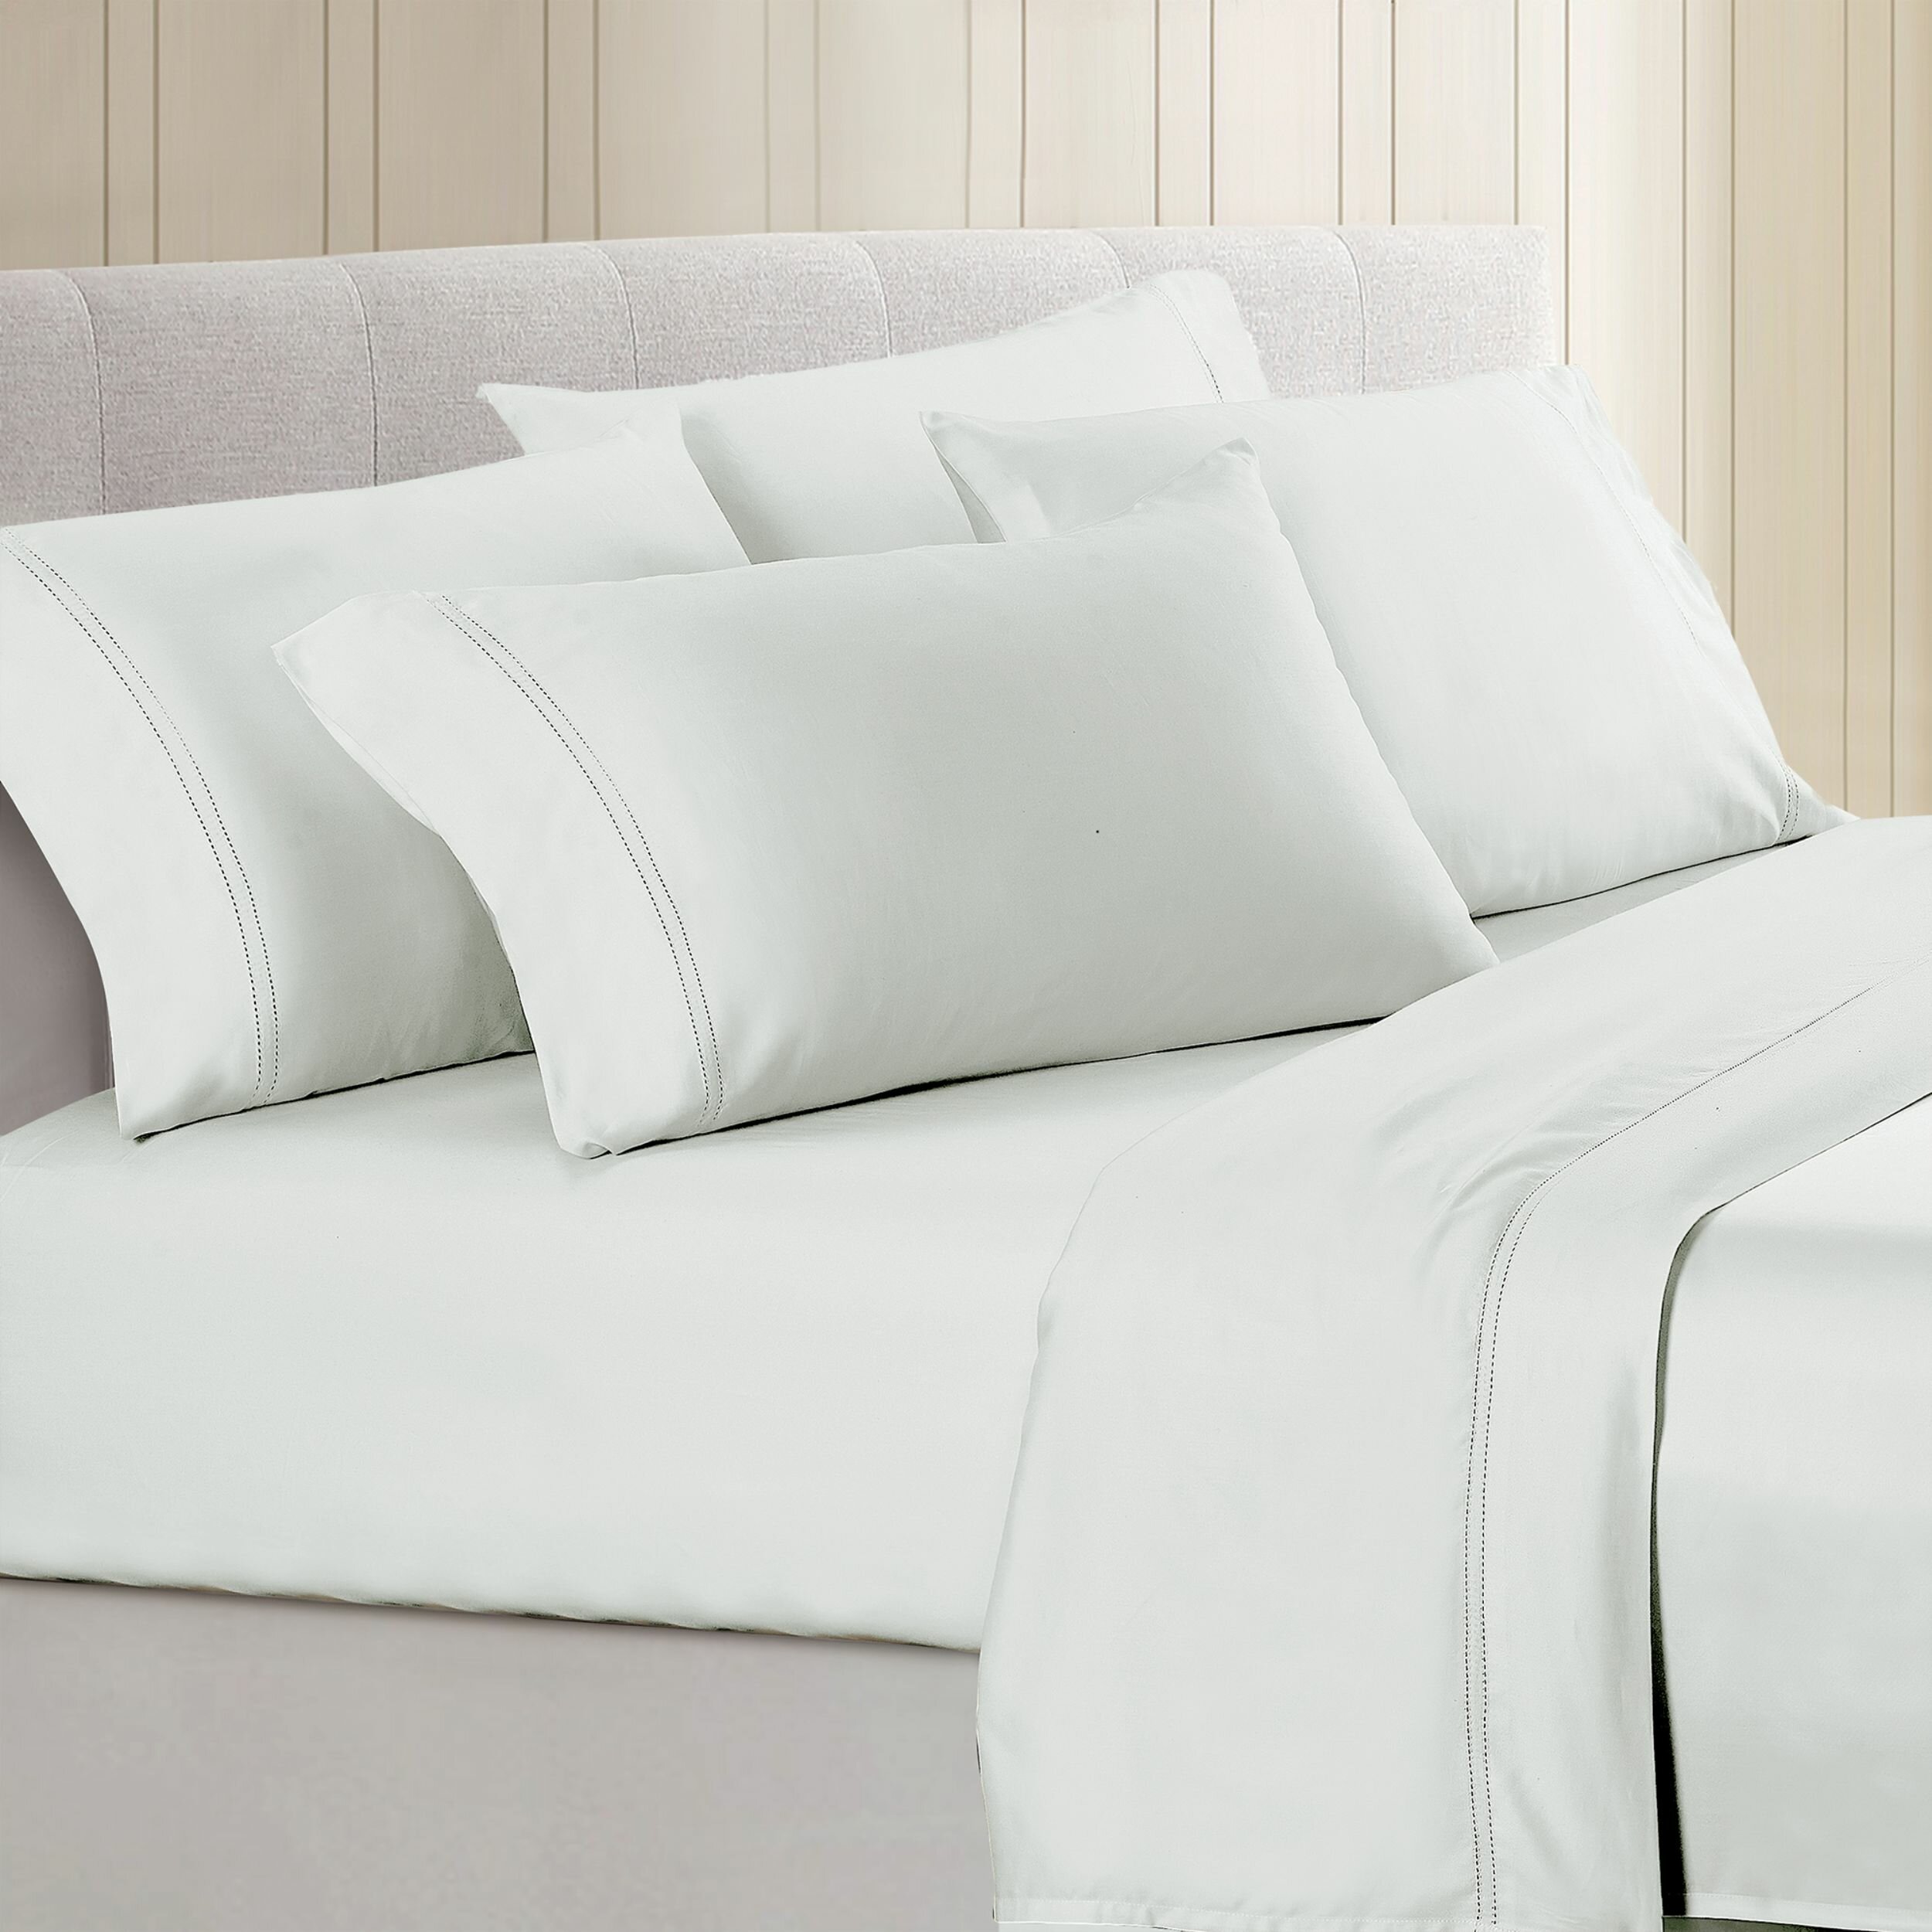 Egyptian Cotton Bed Sheet Set Pillowcase Zebra Print Color 1000 TC USA Size 